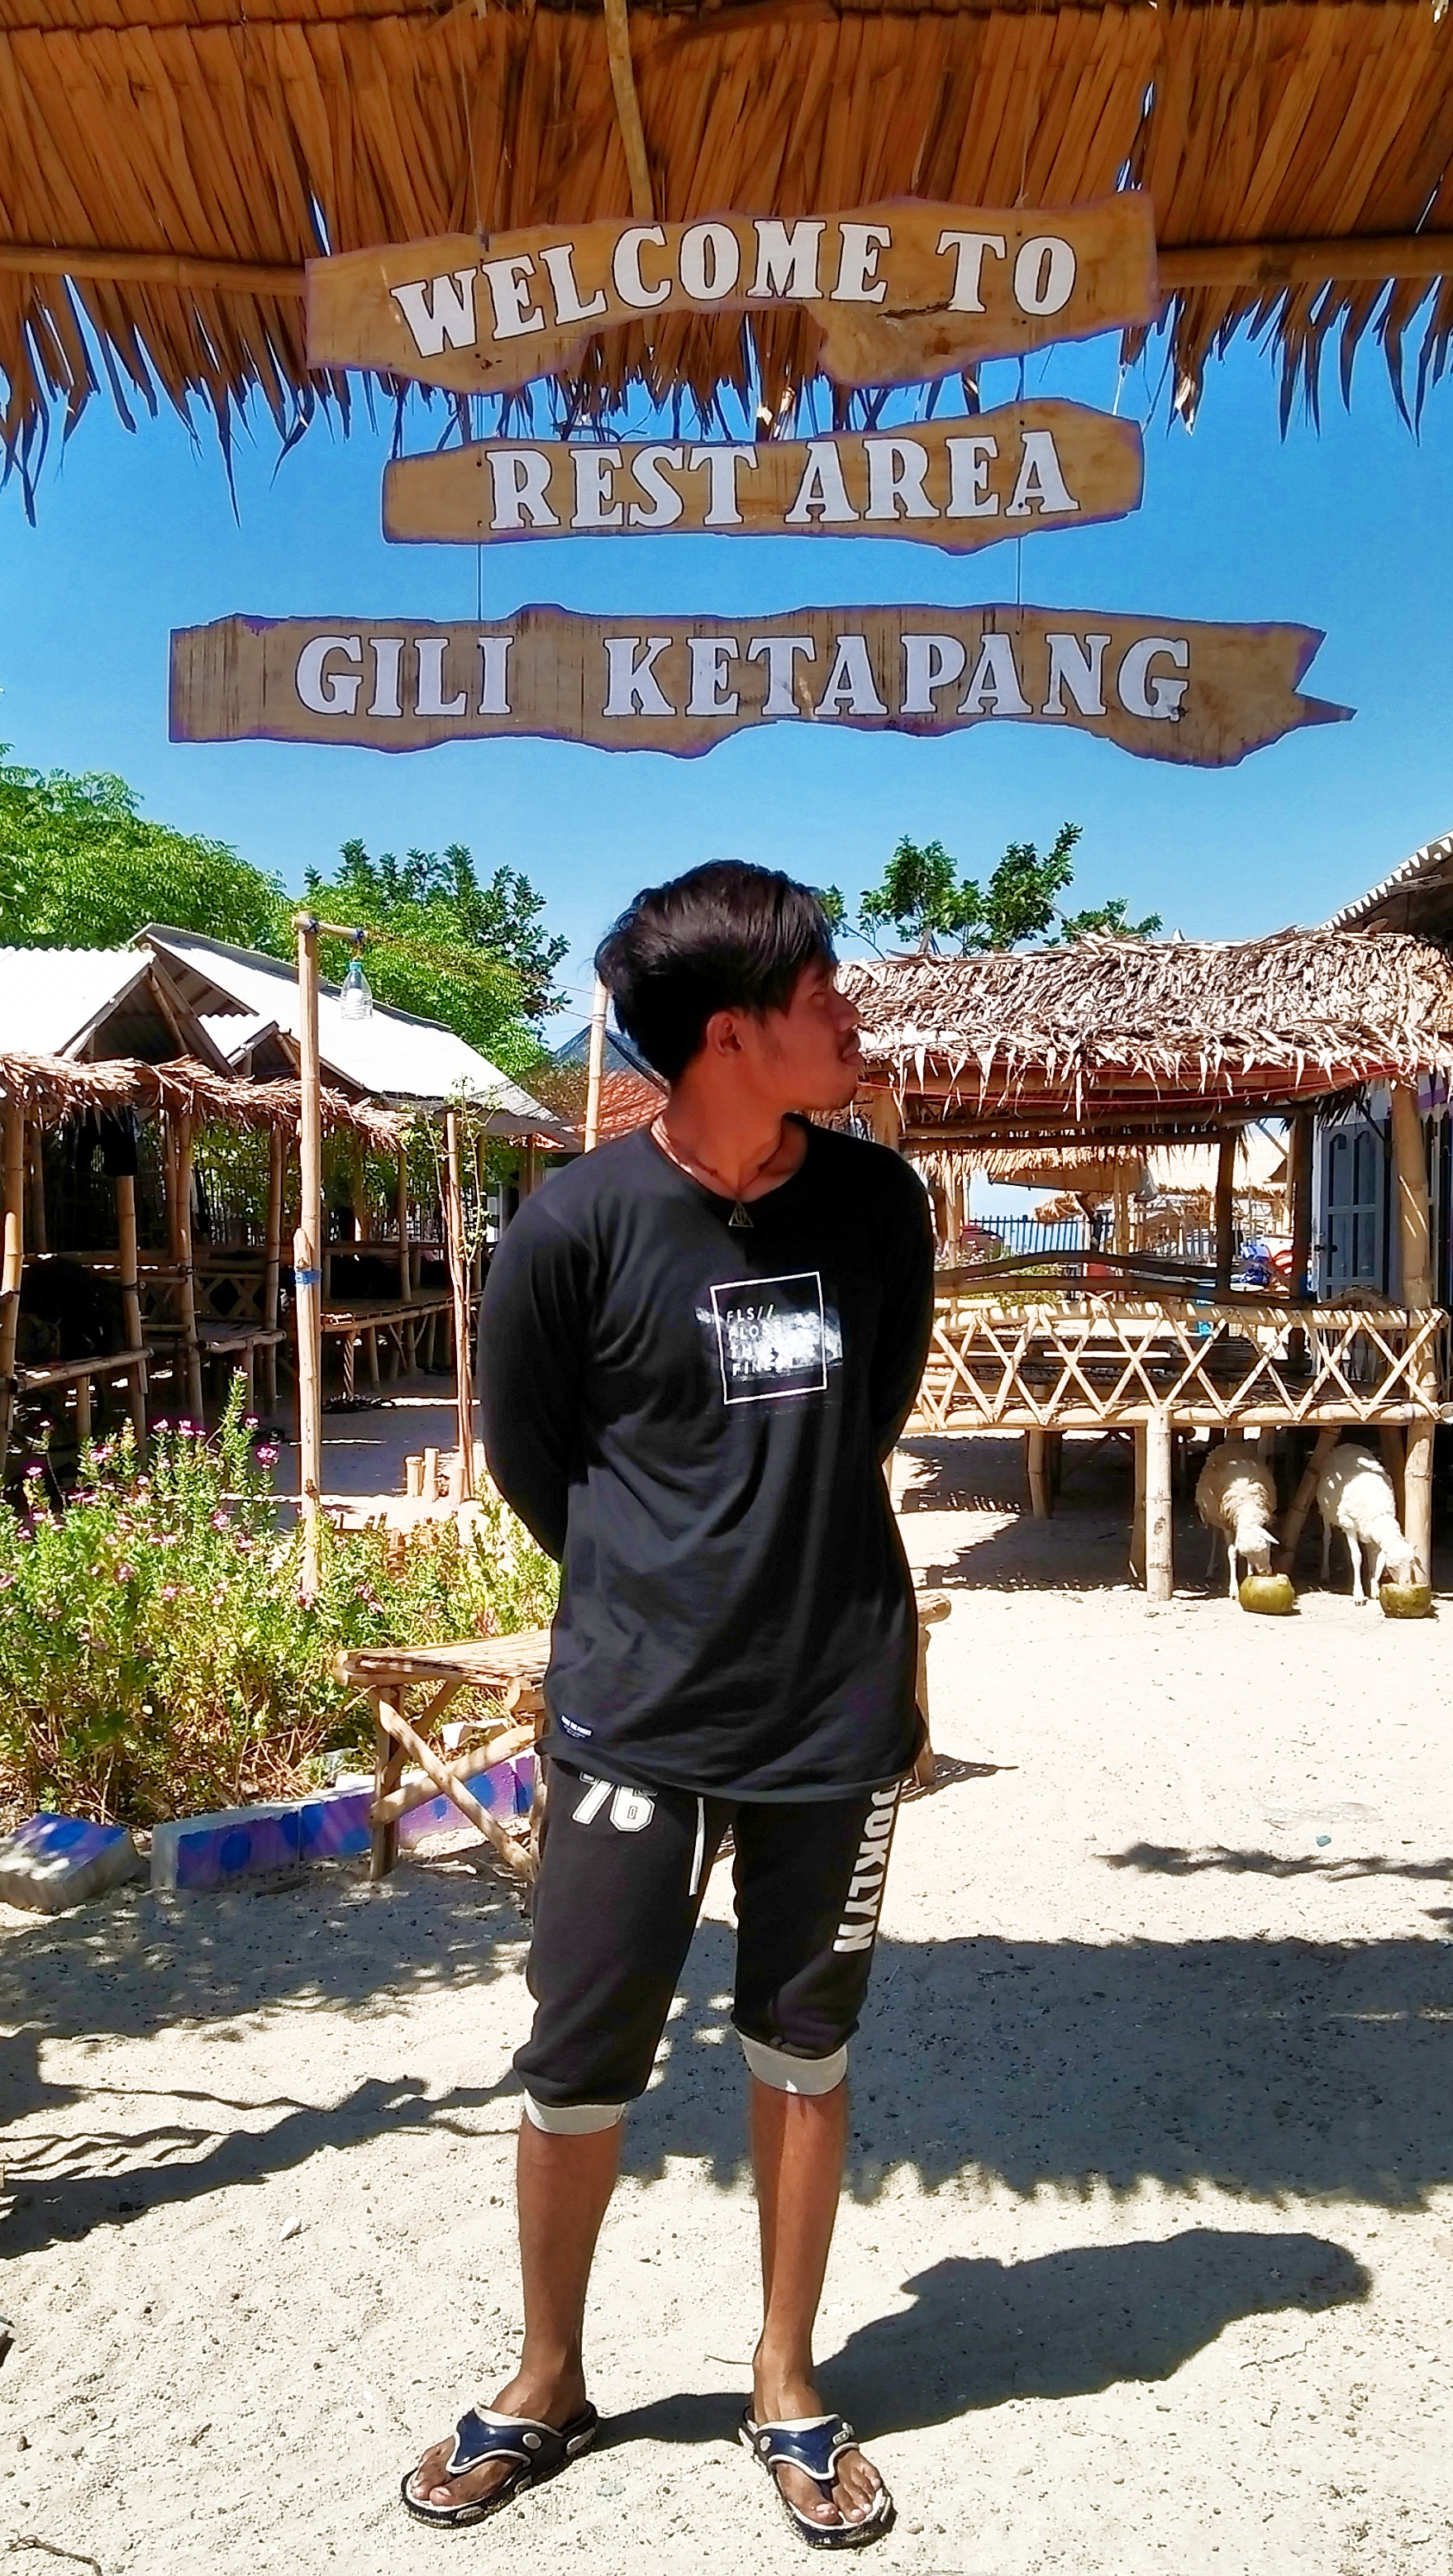 Rest area Gili ketapang (c) Haris Kurniawan/Travelingyuk